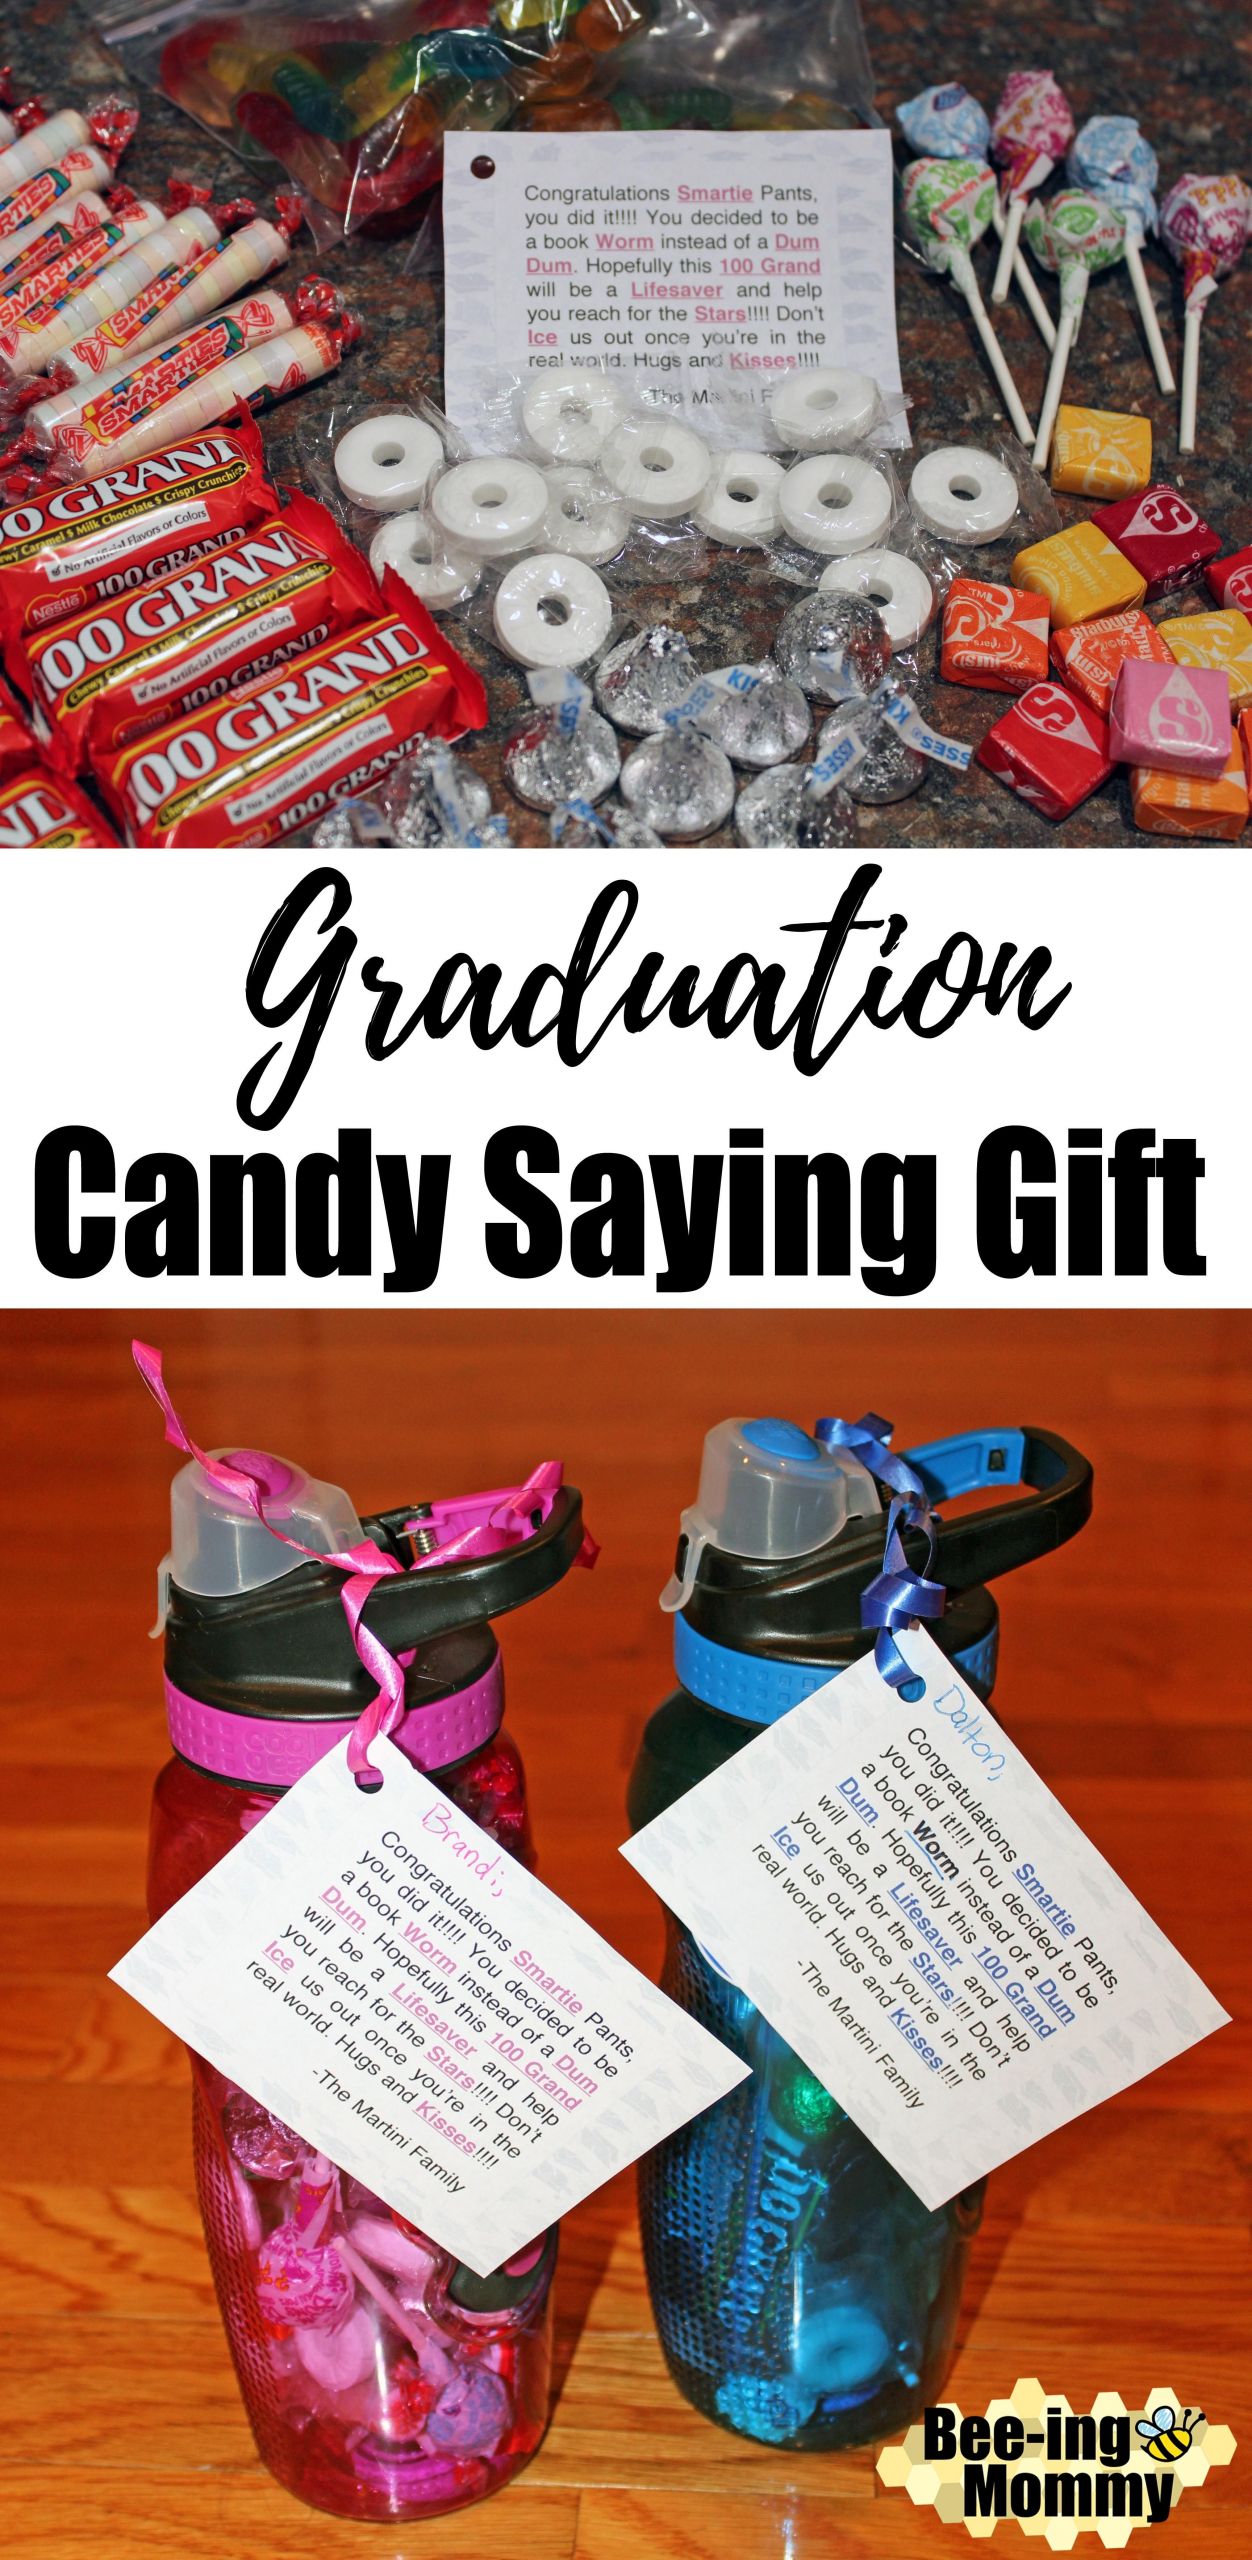 Cheap Graduation Gift Ideas
 Graduation Candy Saying Water Bottle Gift